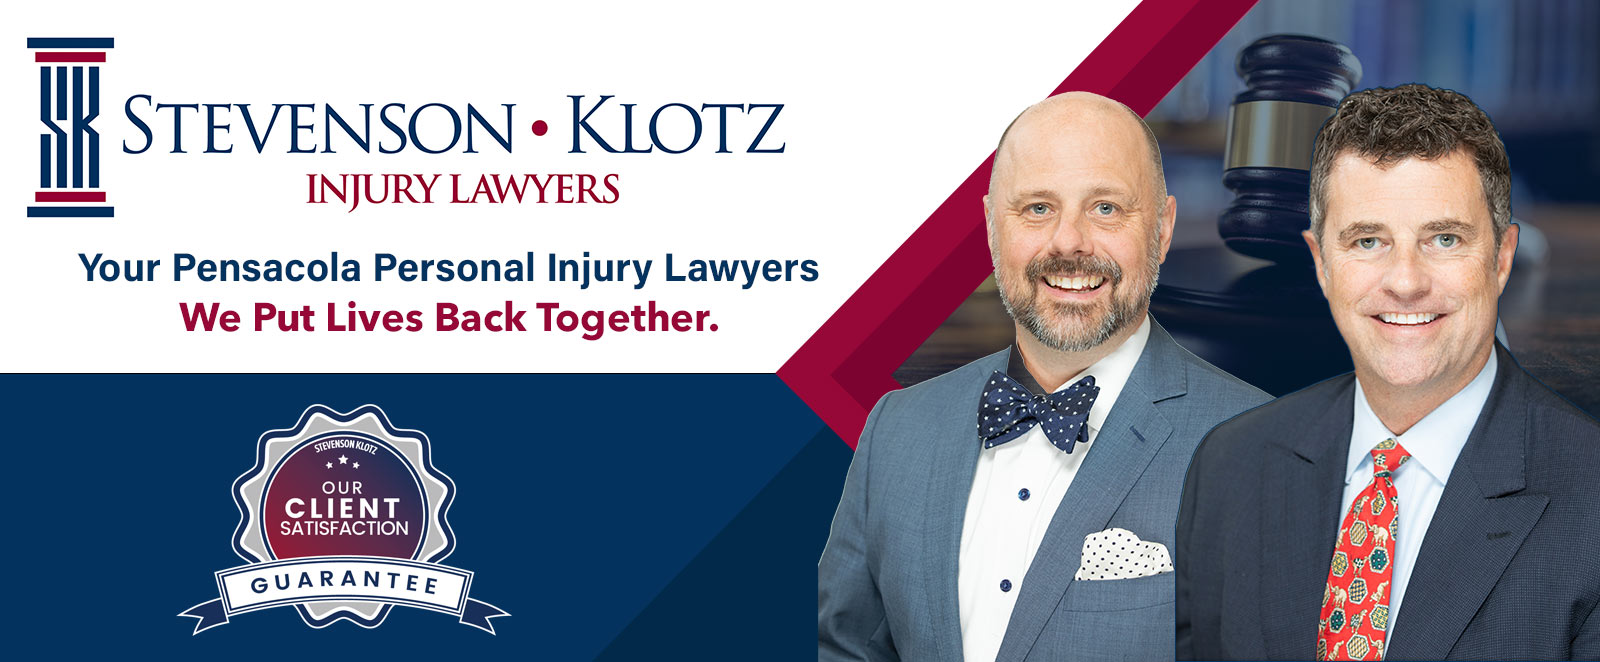 Stevenson Klotz Injury Lawyers - Pensacola, FL